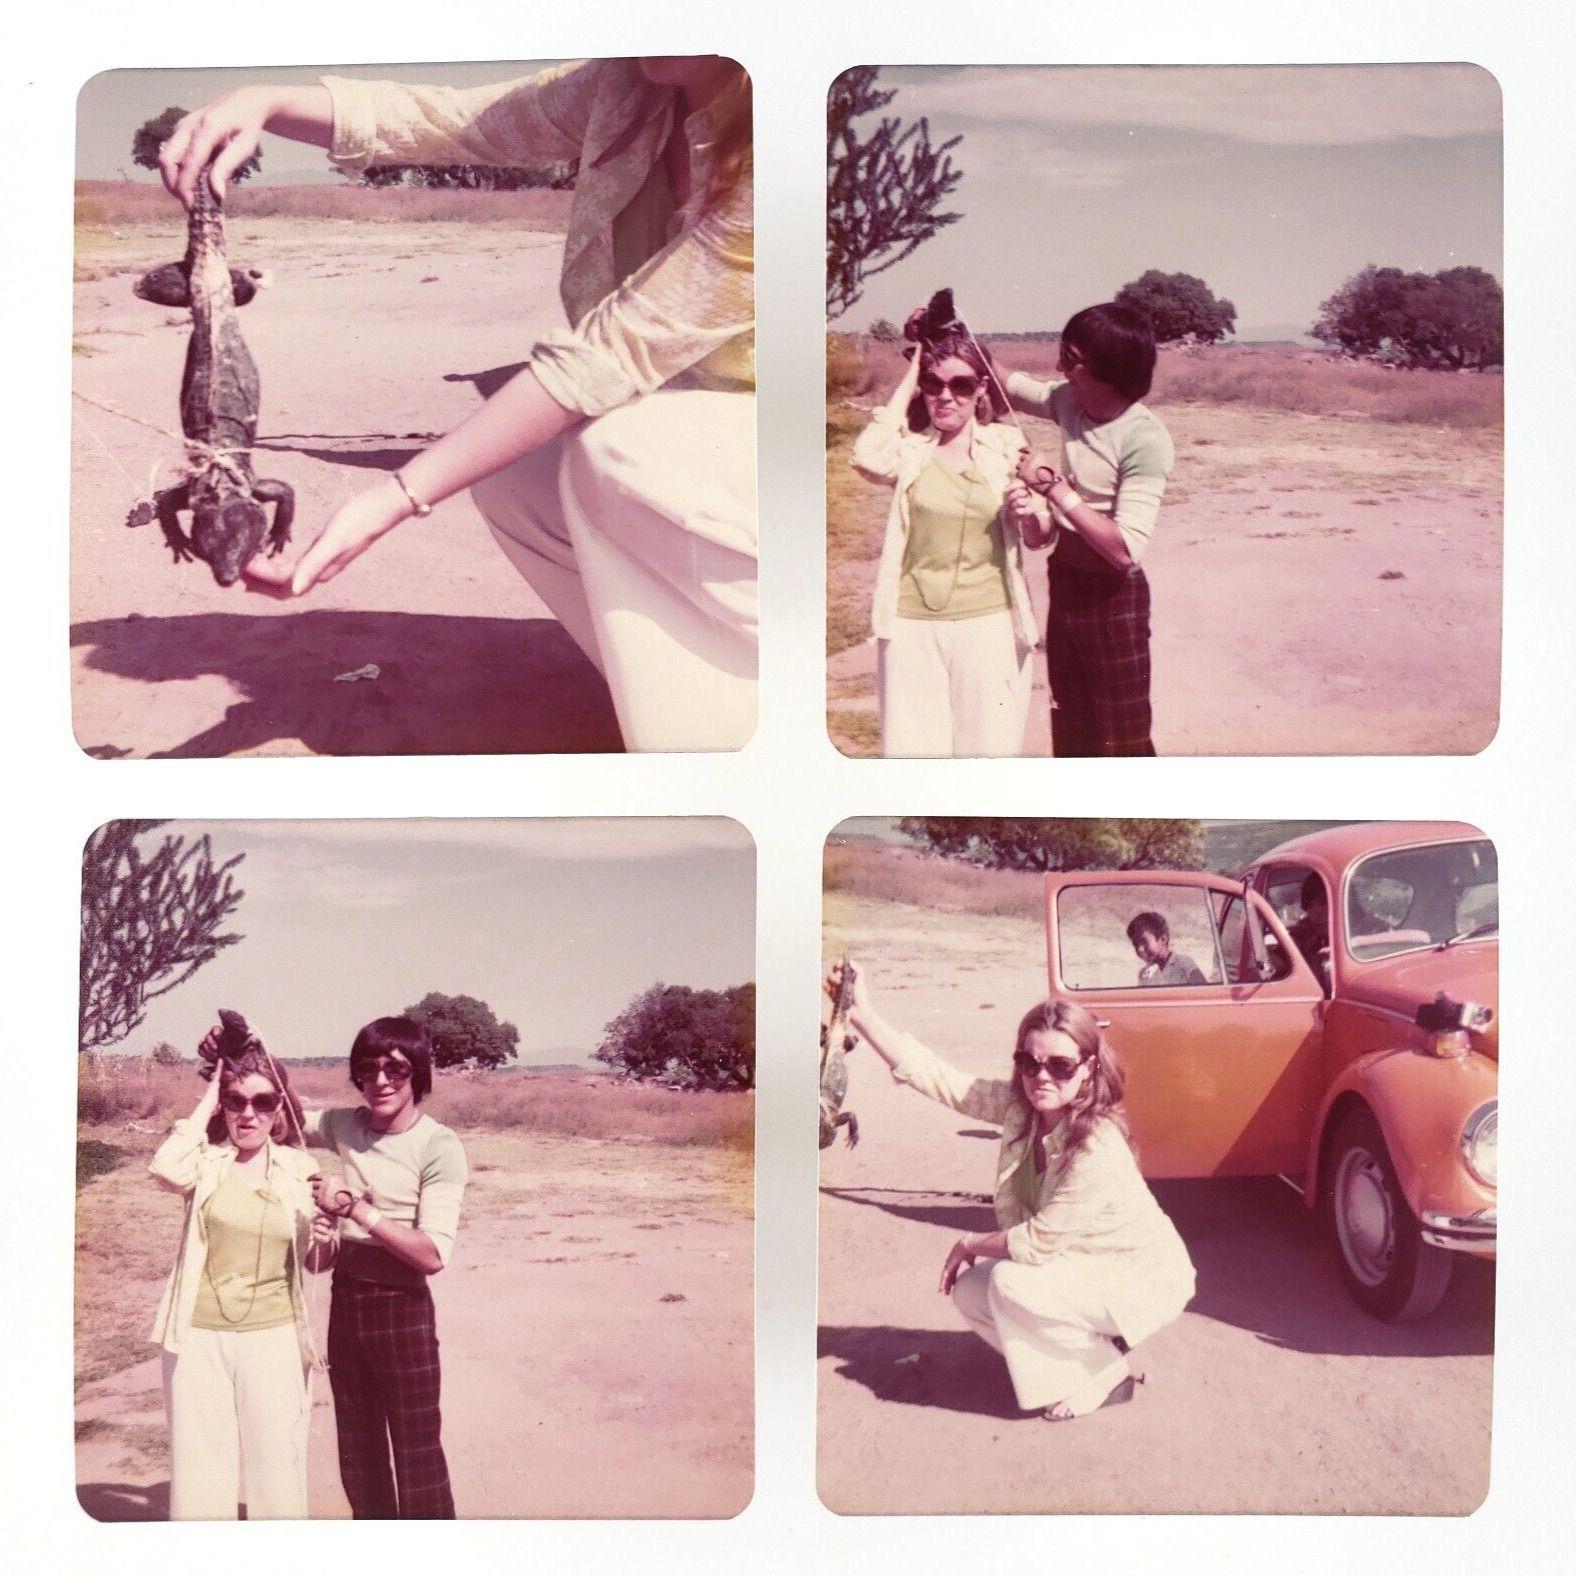 Woman & Desert Lizard Snapshot Set 1970s Vintage Car on Road Trip Photos B3549